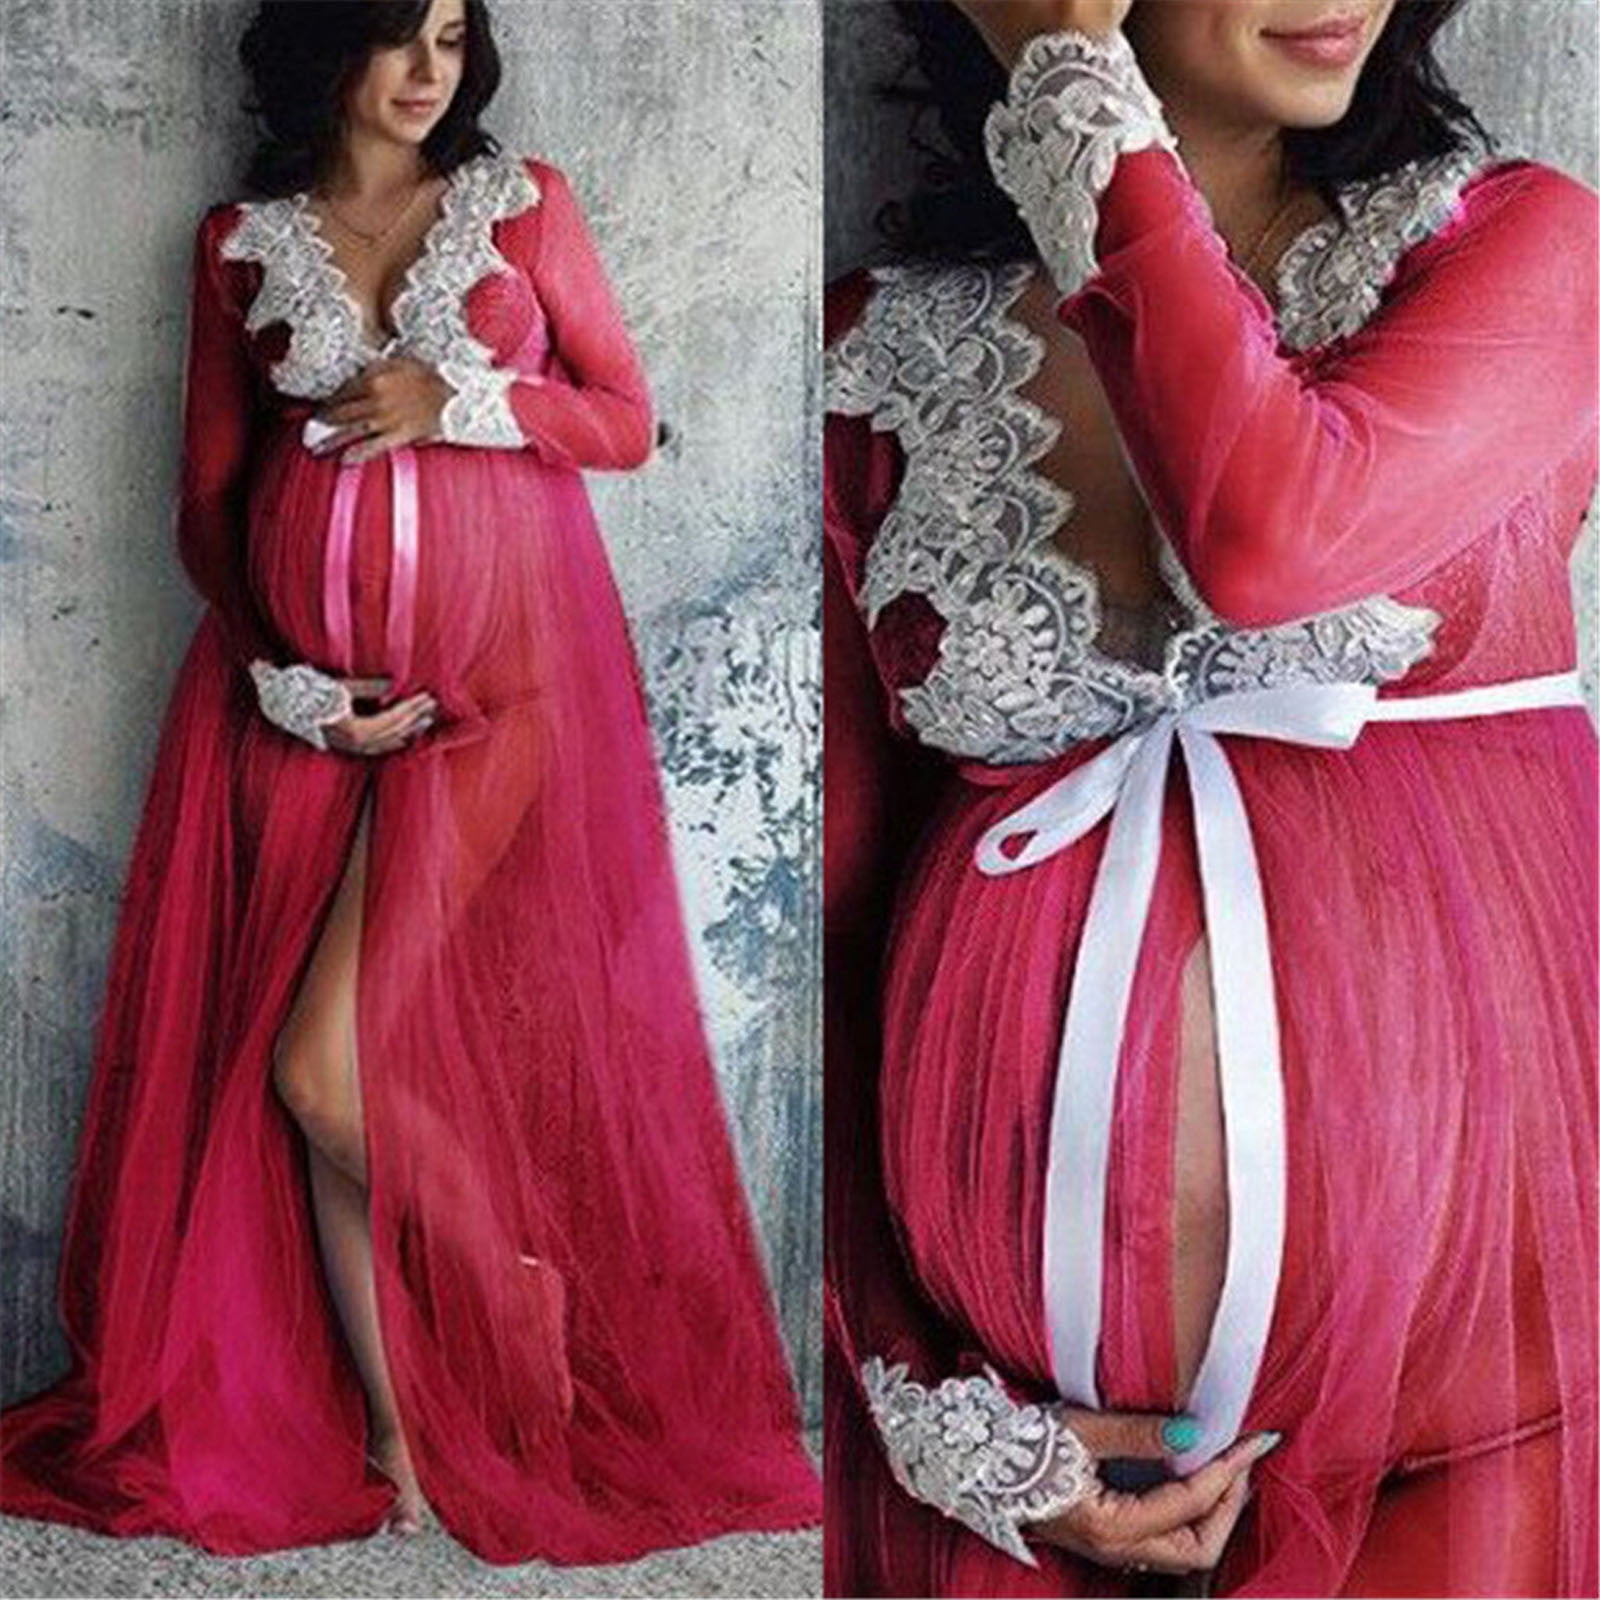 Juebong Maternity Dress Lace Long Sleeve Maxi Baby Shower Photoshoot V neck Net Yarn Split Fork Dresses Belt 7f894359 fc61 4093 b5fa a197bd2cf12b.977866e6c8812f3c24f1a64f83f61712